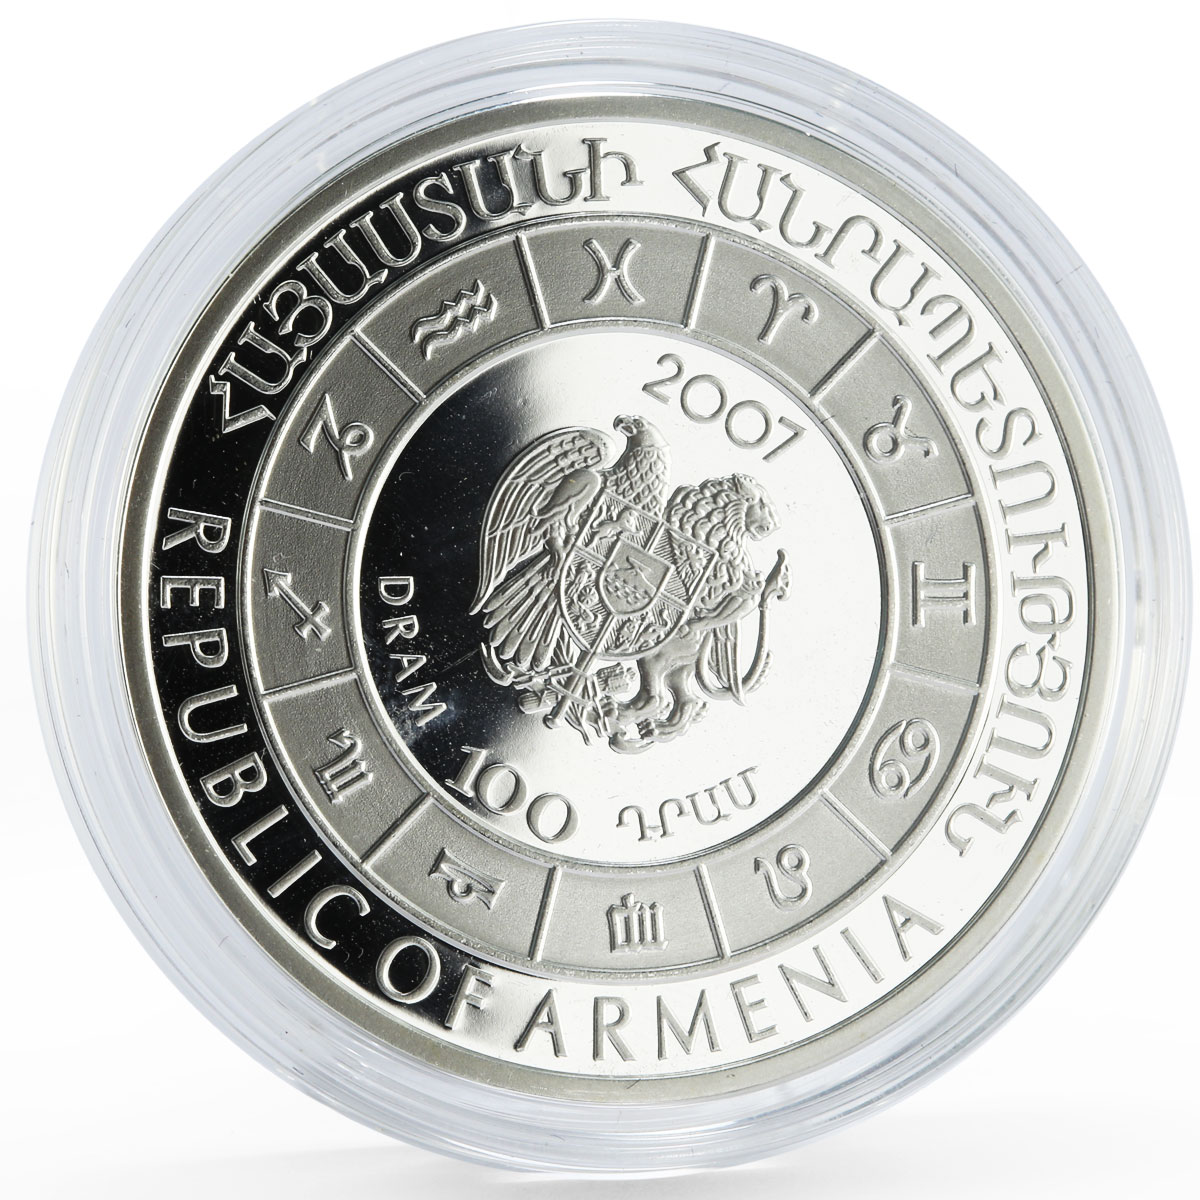 Armenia 100 dram Zodiac Signs series Capricorn colored silver coin 2007